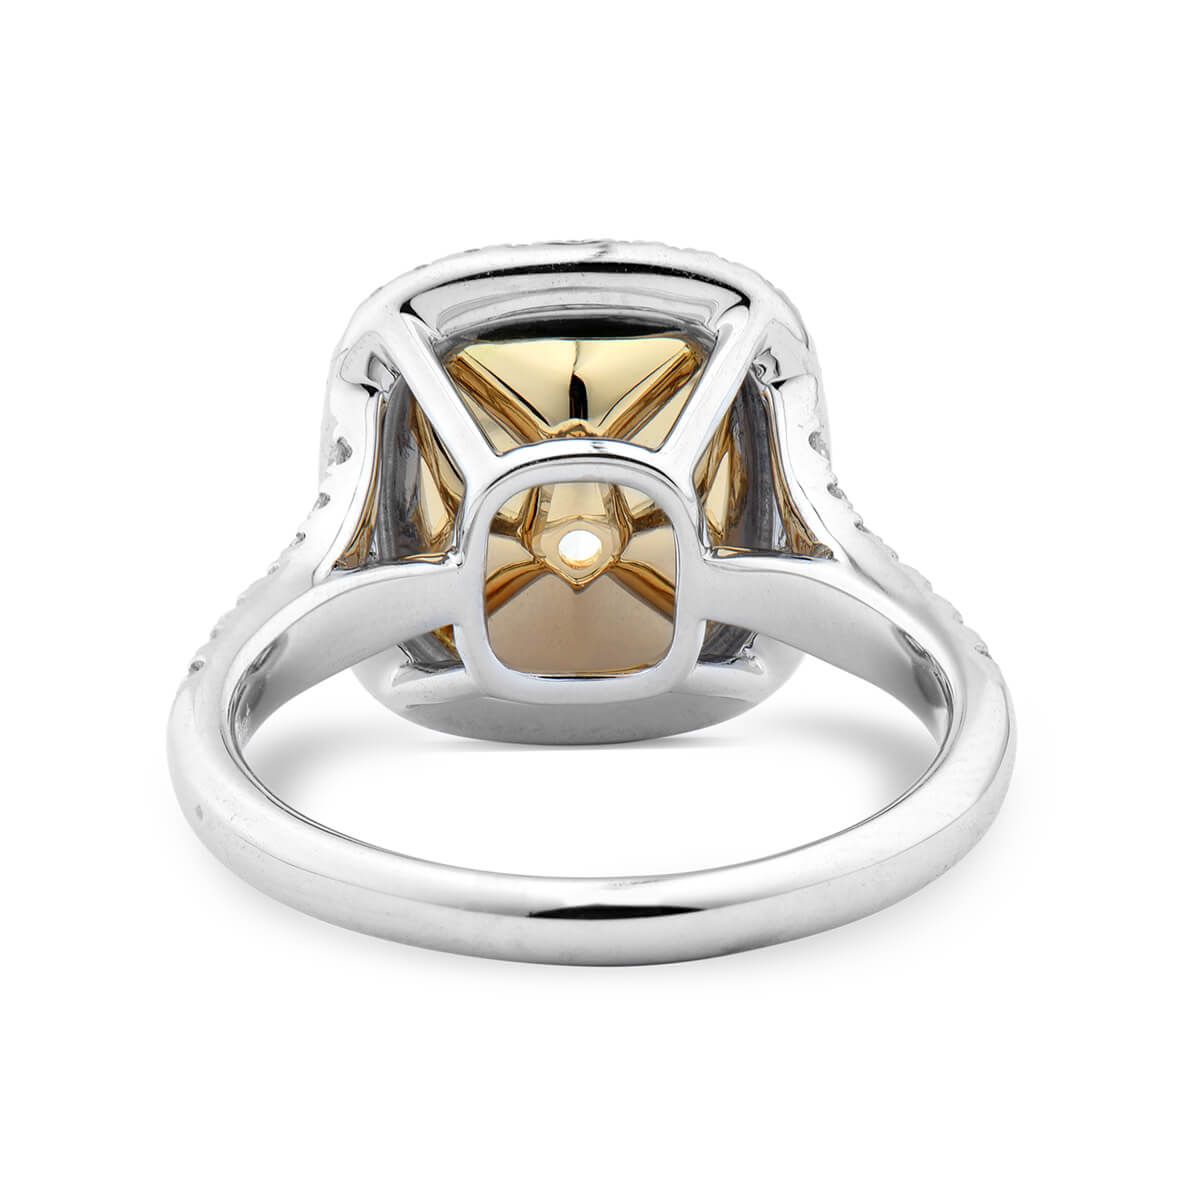 Light Yellow (W-X) Diamond Ring, 3.01 Ct. (3.56 Ct. TW), Cushion shape, GIA Certified, 2195248742